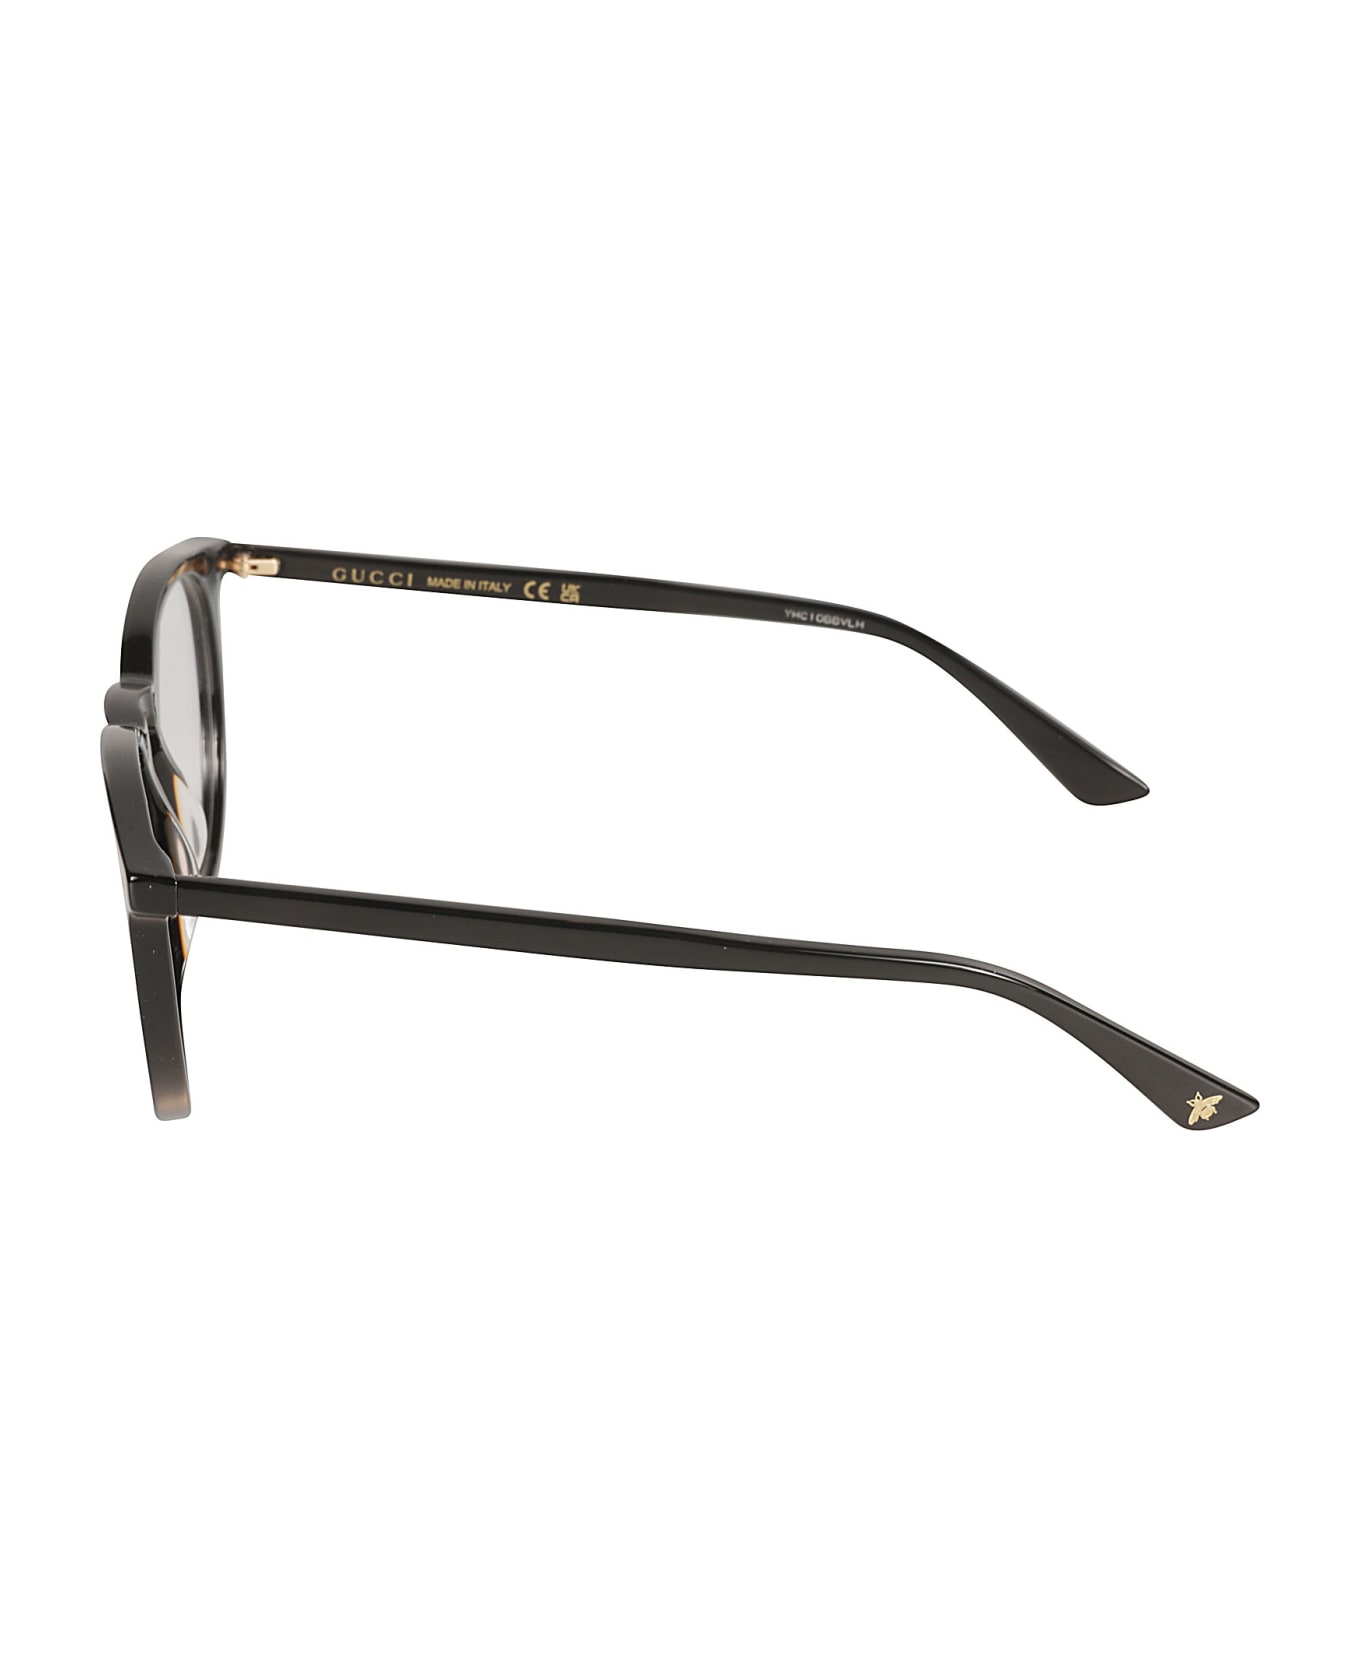 Gucci Eyewear Round Frame Glasses - Black/Transparent